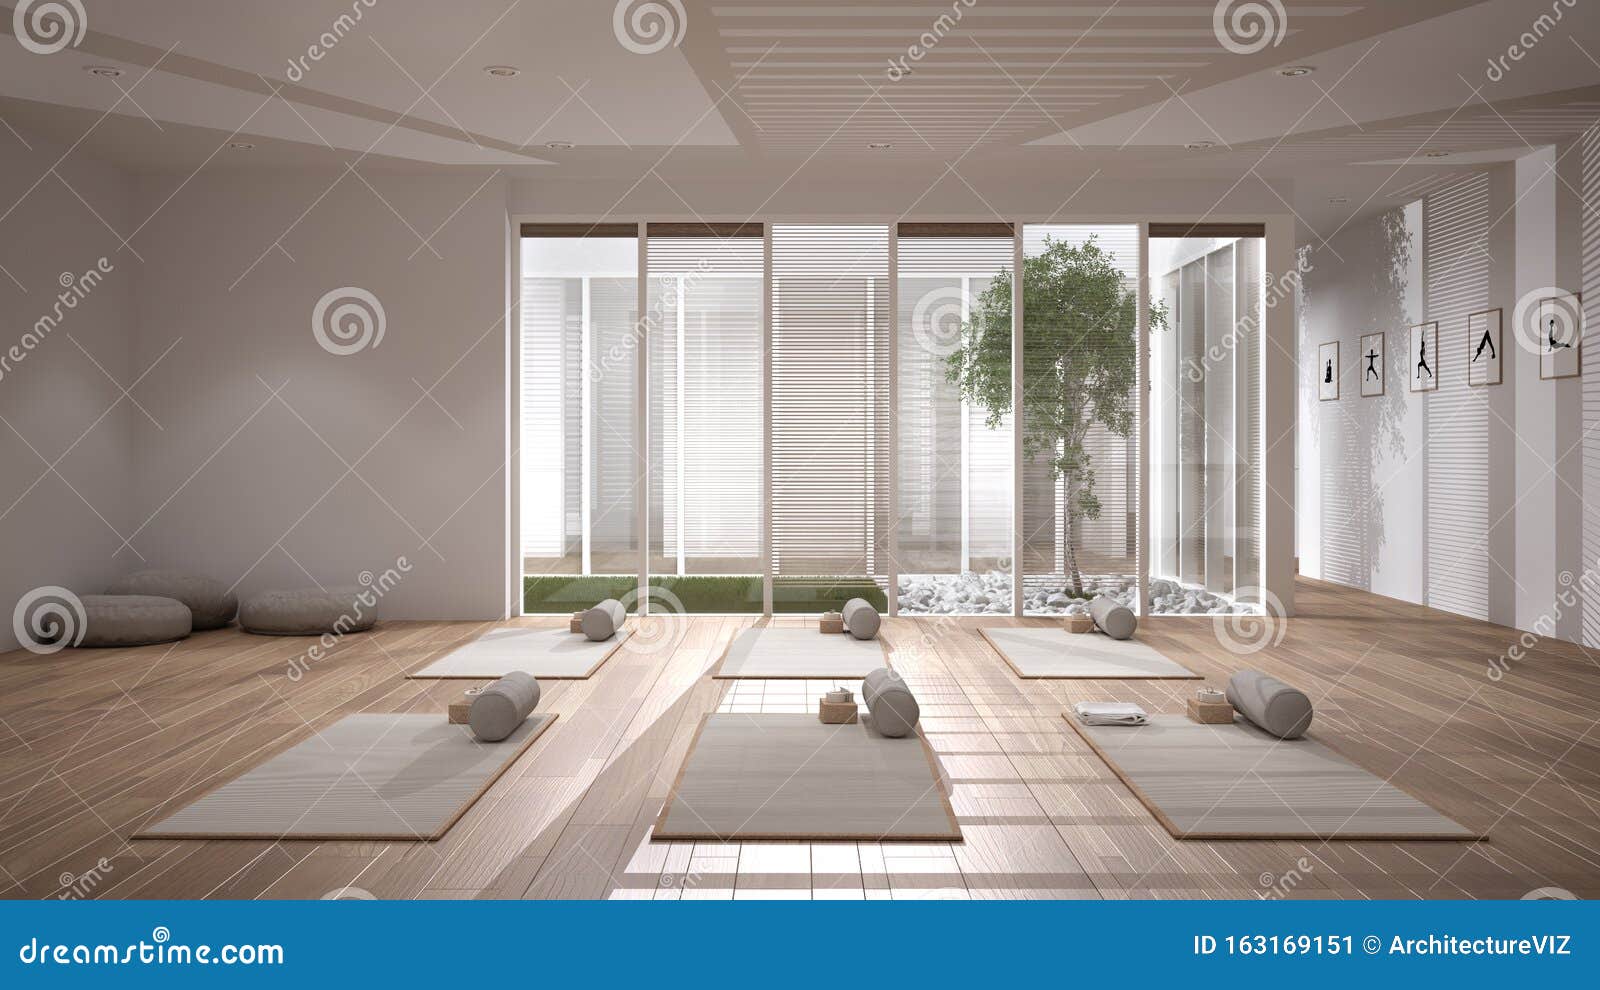 Empty Yoga Studio Interior Design Open Space With Mats Pillows